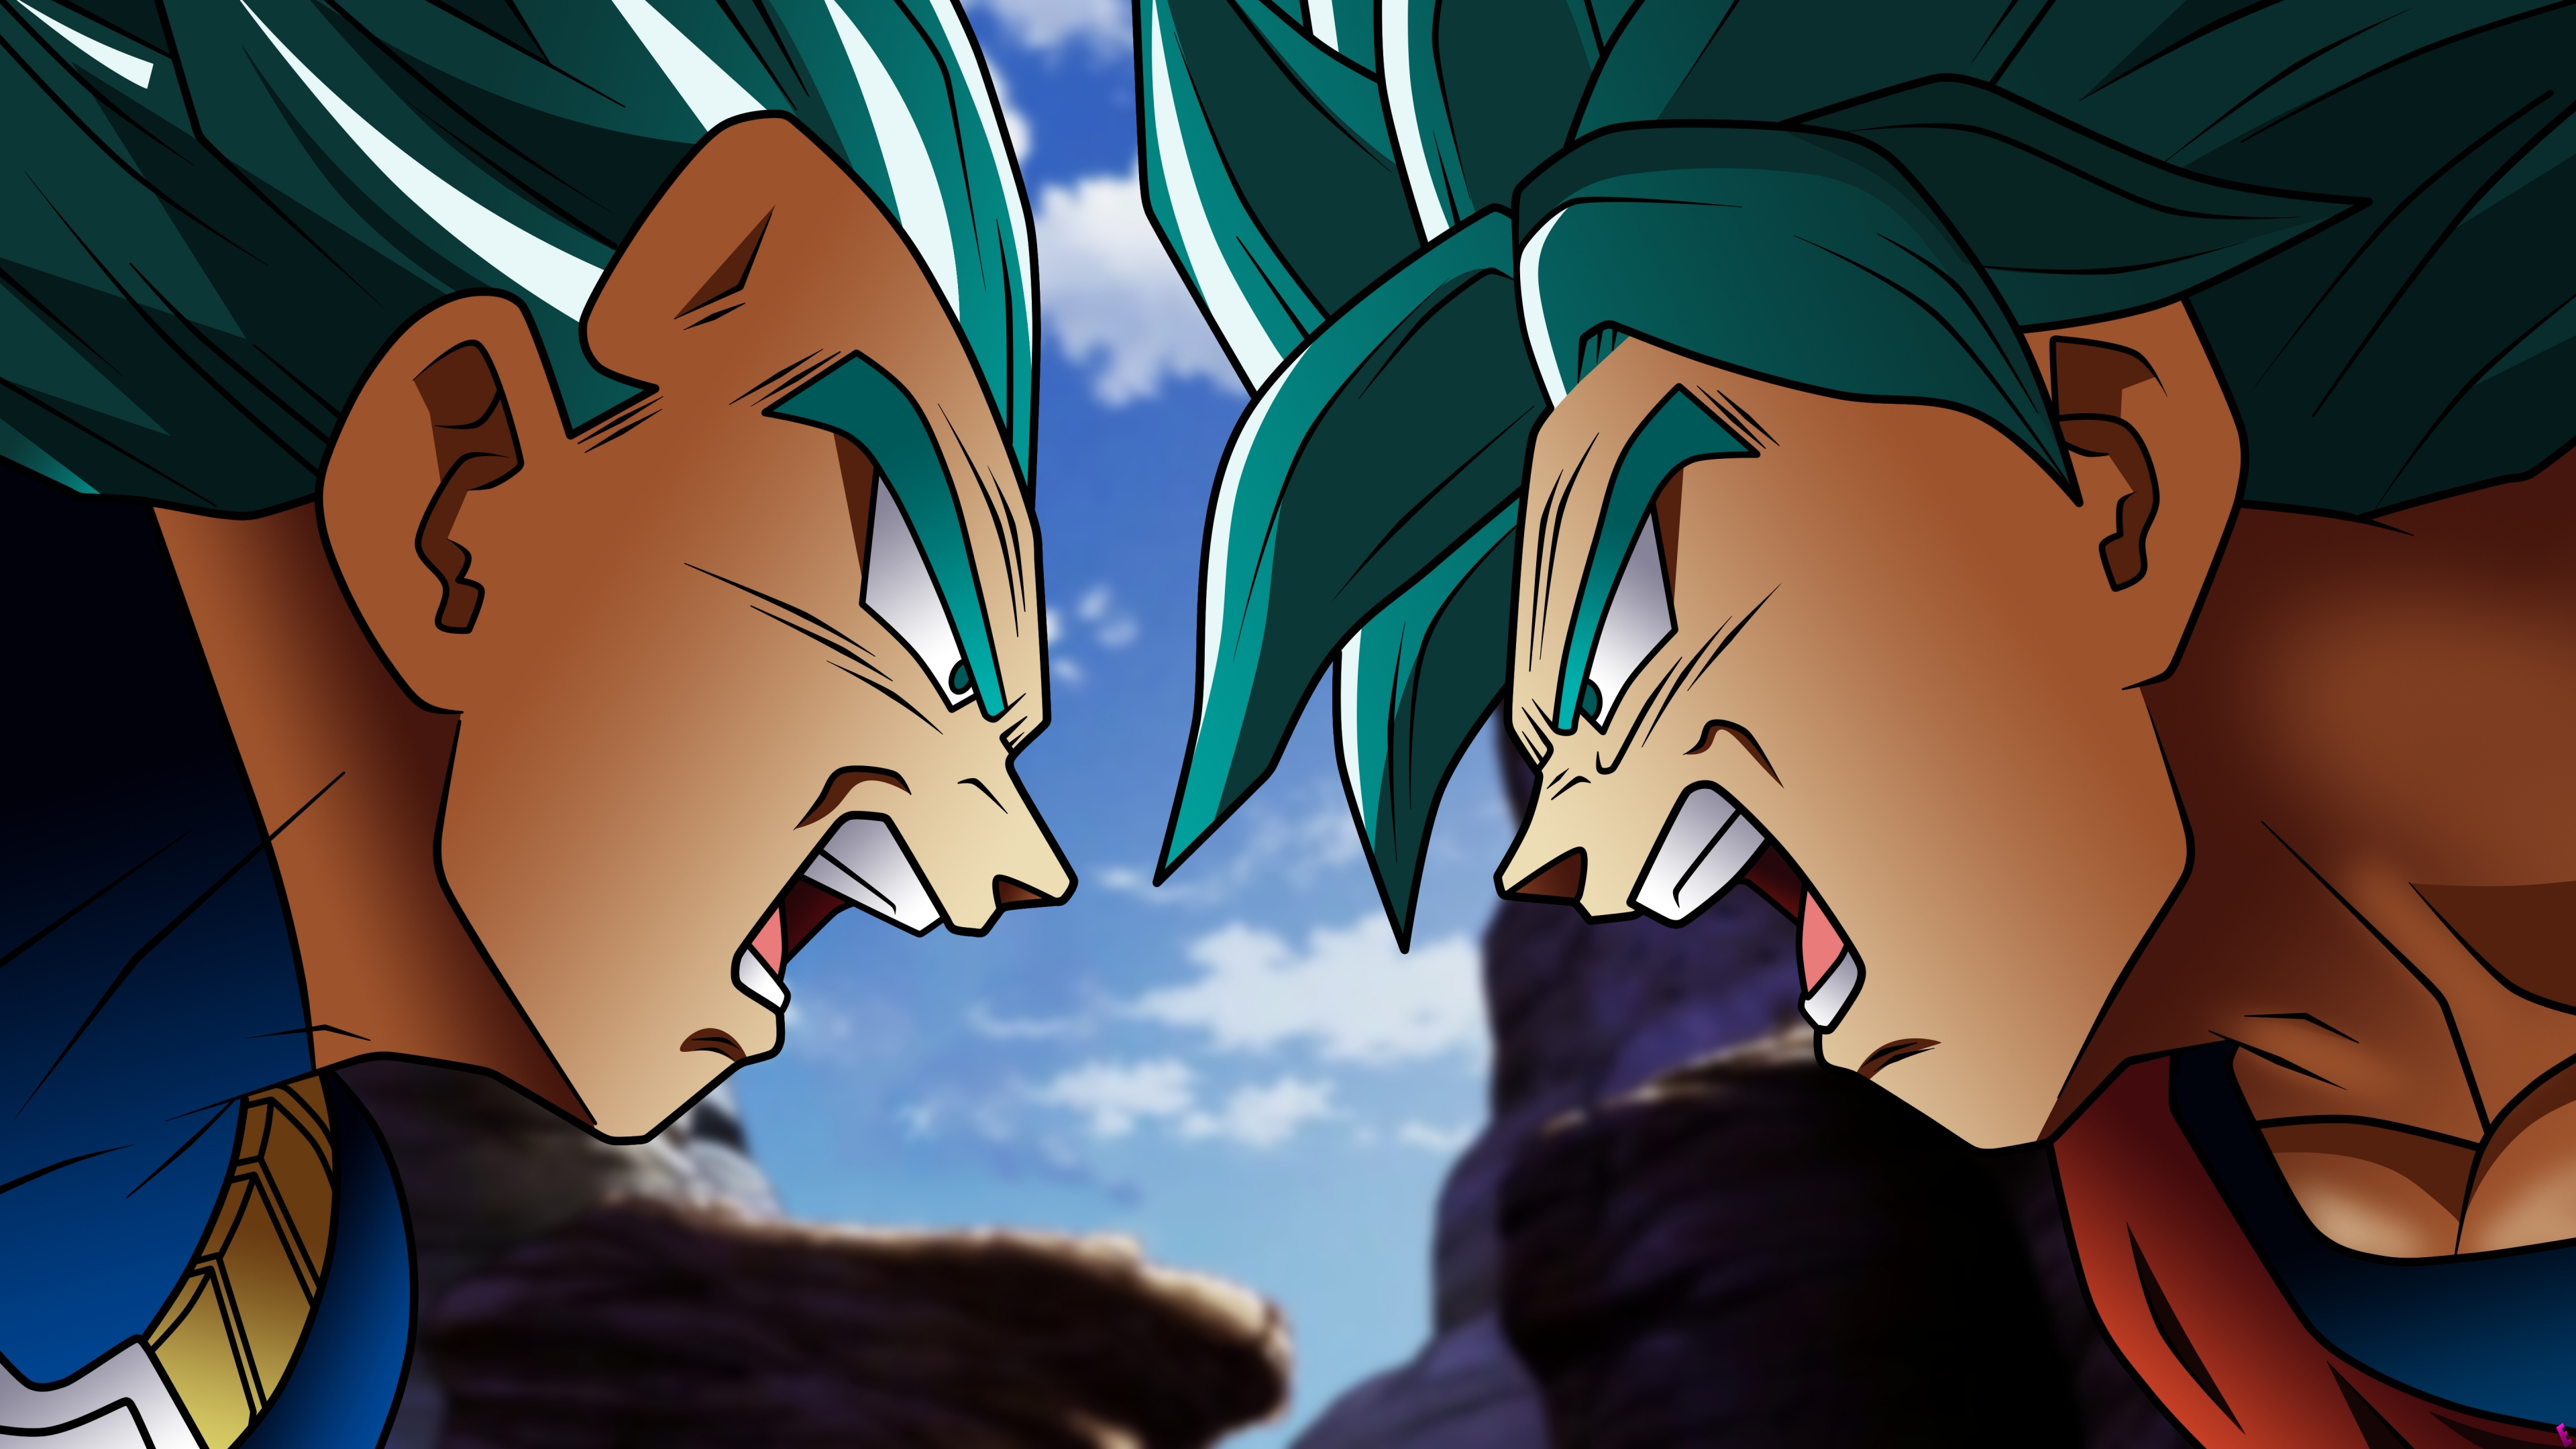 Vegeta VS Goku from Dragon Ball Super Anime Wallpaper ID:4990